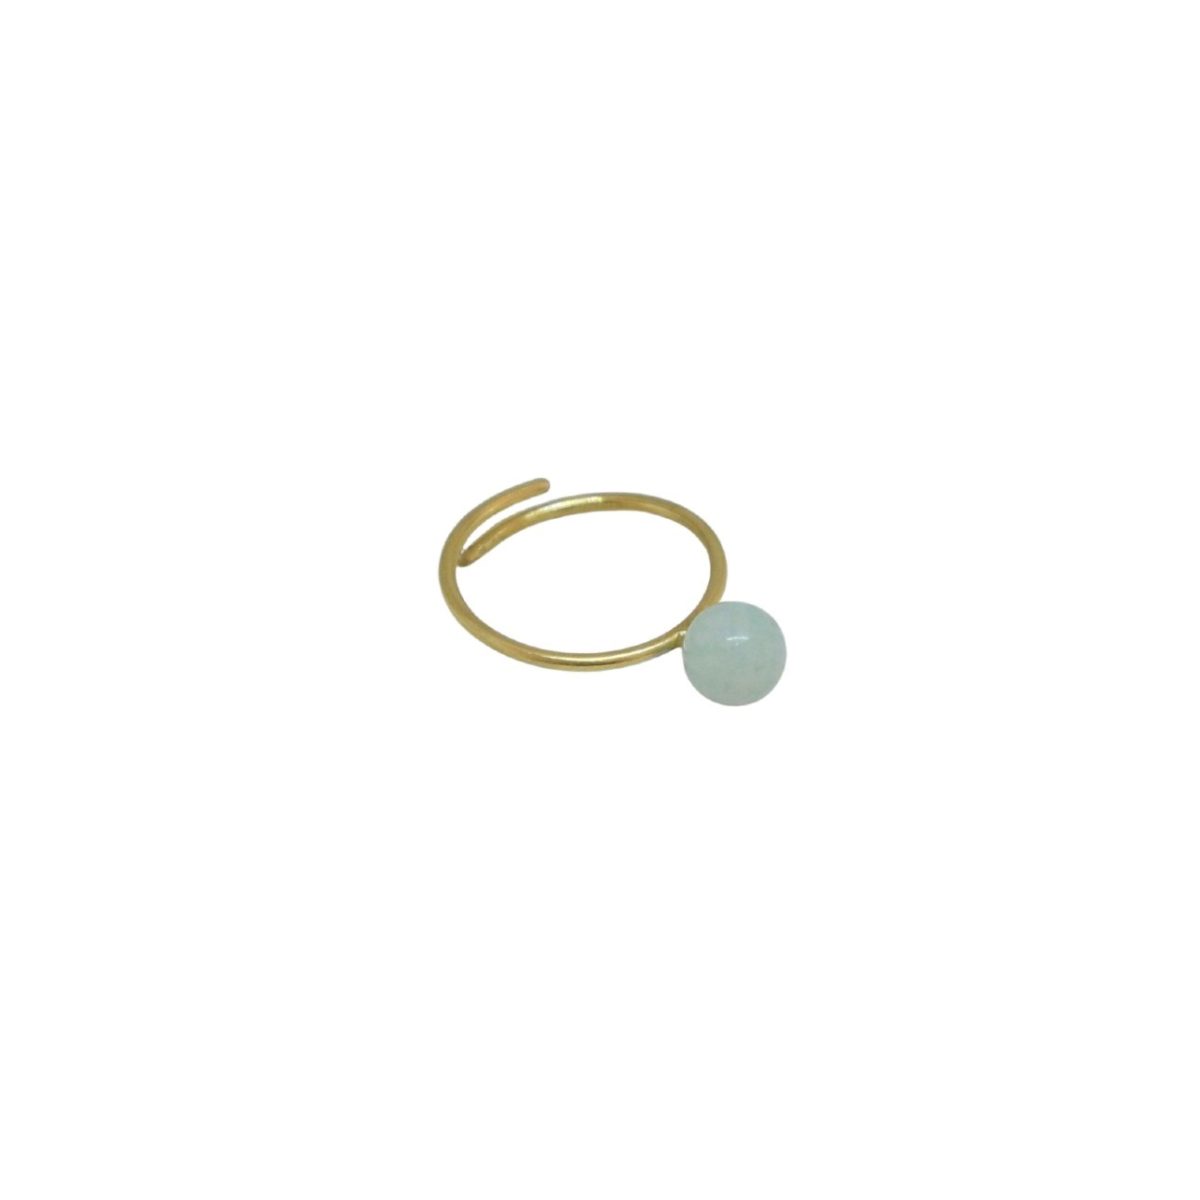 “Petra” επίχρυσο δαχτυλίδι (Ακουαμαρίνα) “Petra” επίχρυσο δαχτυλίδι (Ακουαμαρίνα) “Petra” επίχρυσο δαχτυλίδι (Ακουαμαρίνα) 4